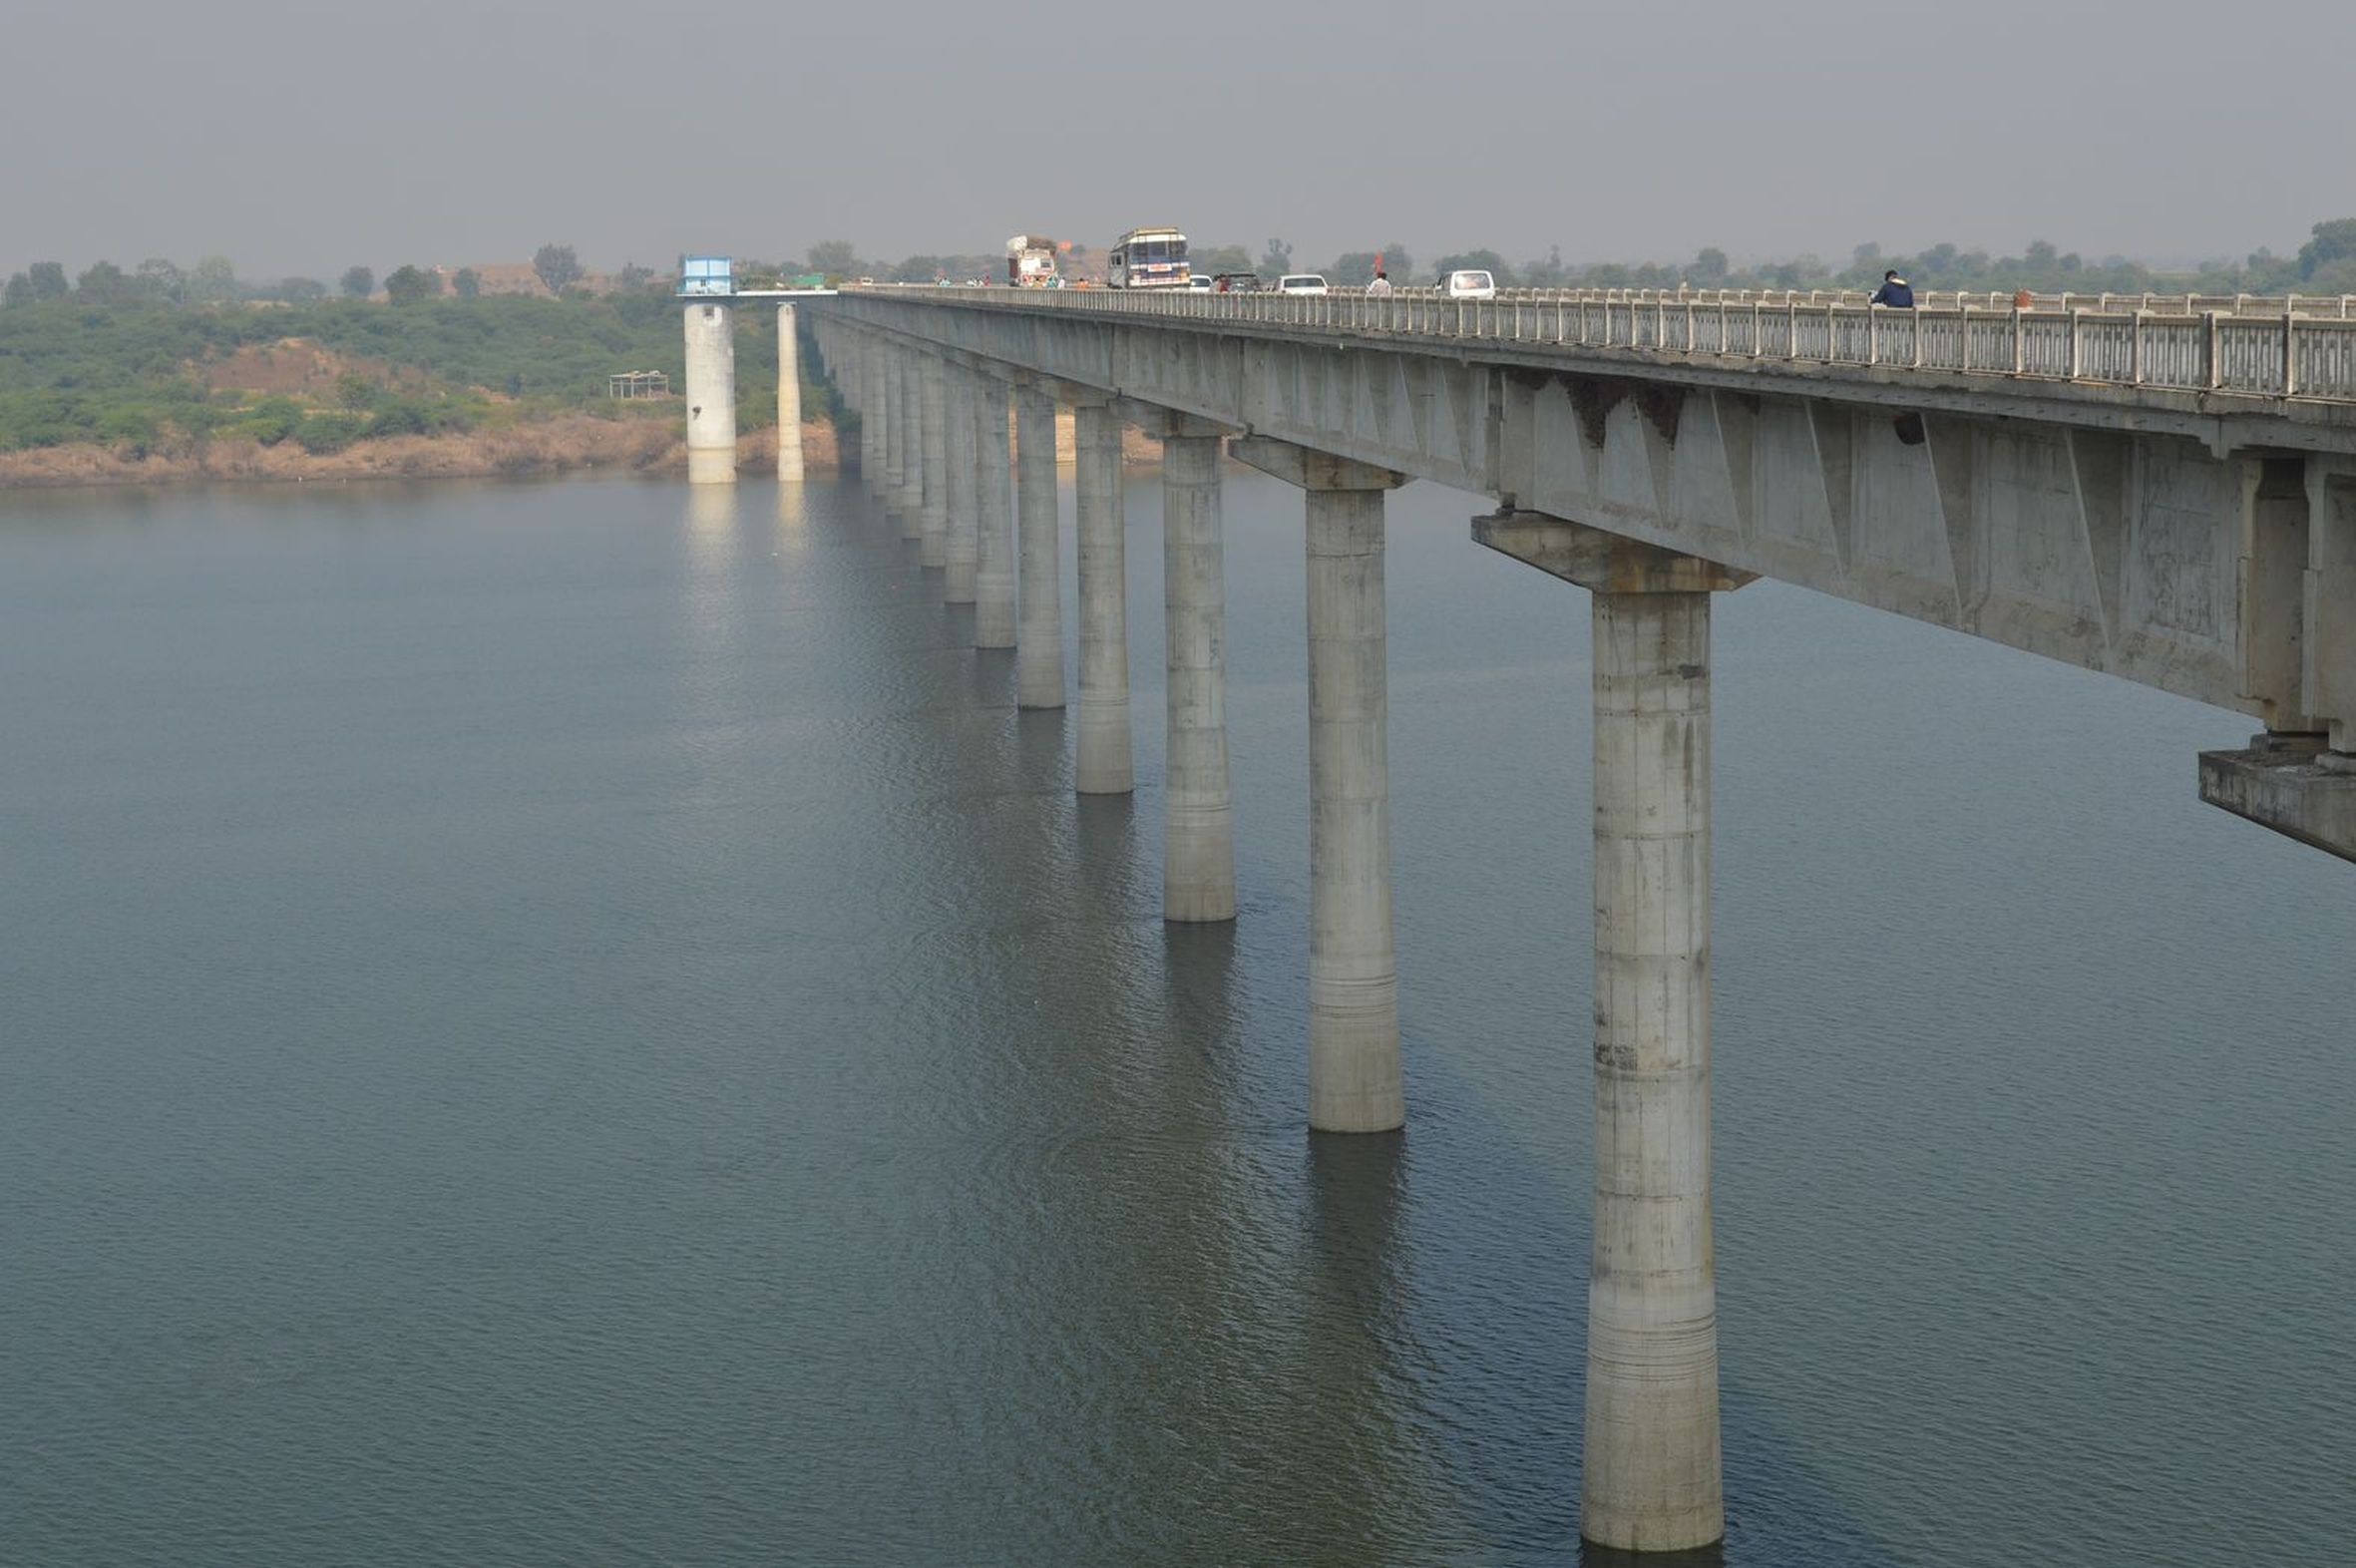 Suicide Point has become big bridge on Narmada